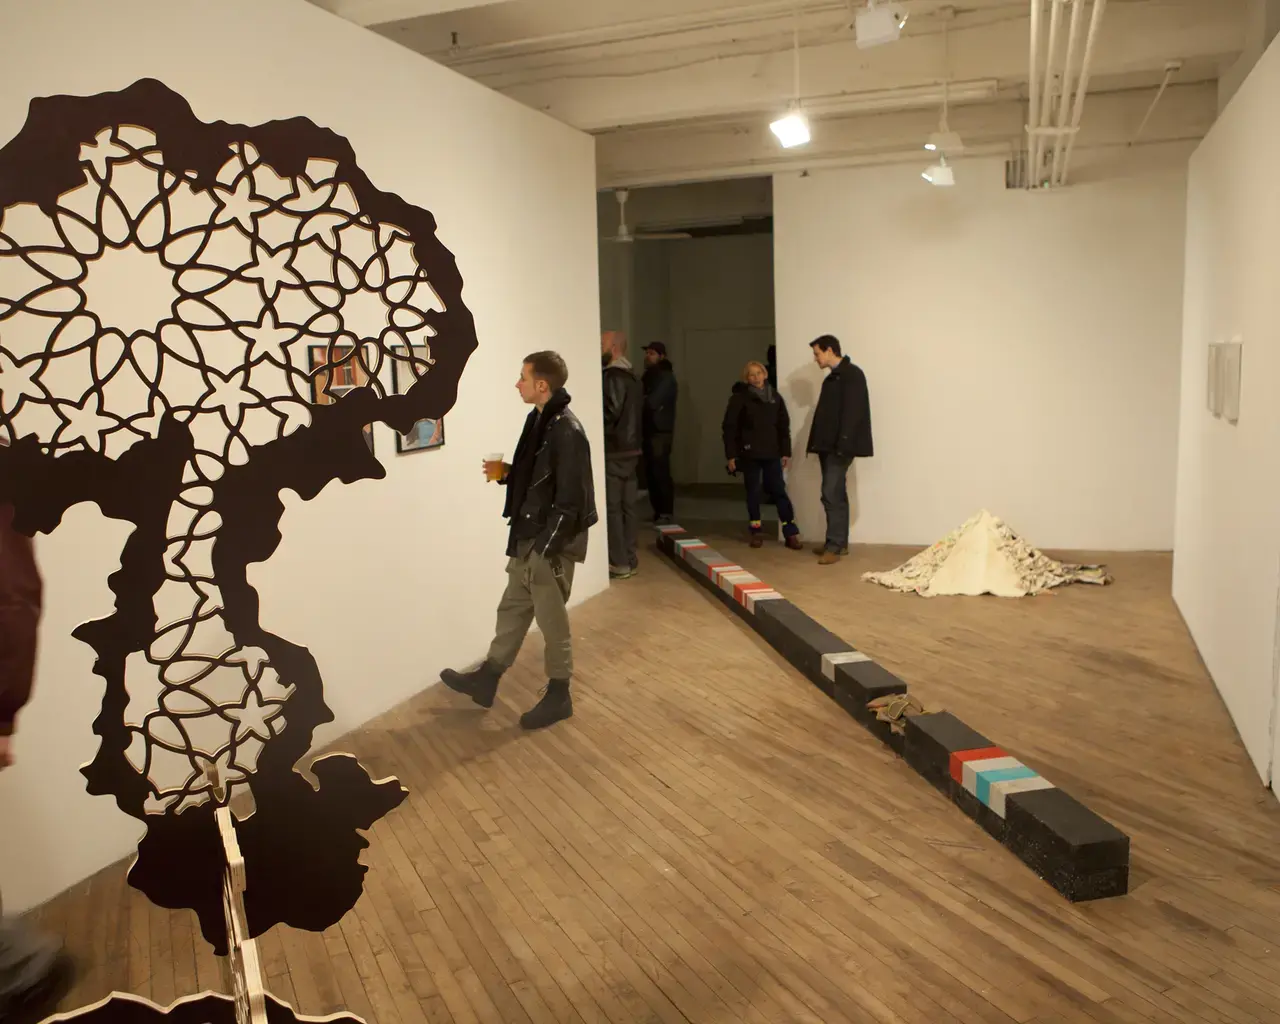 From left: Sherin Guirguis, Mashrabeya, plywood, 2009. Kianja Strobert, Color Line, sculpture, 2010. Photo courtesy of Vox Populi.